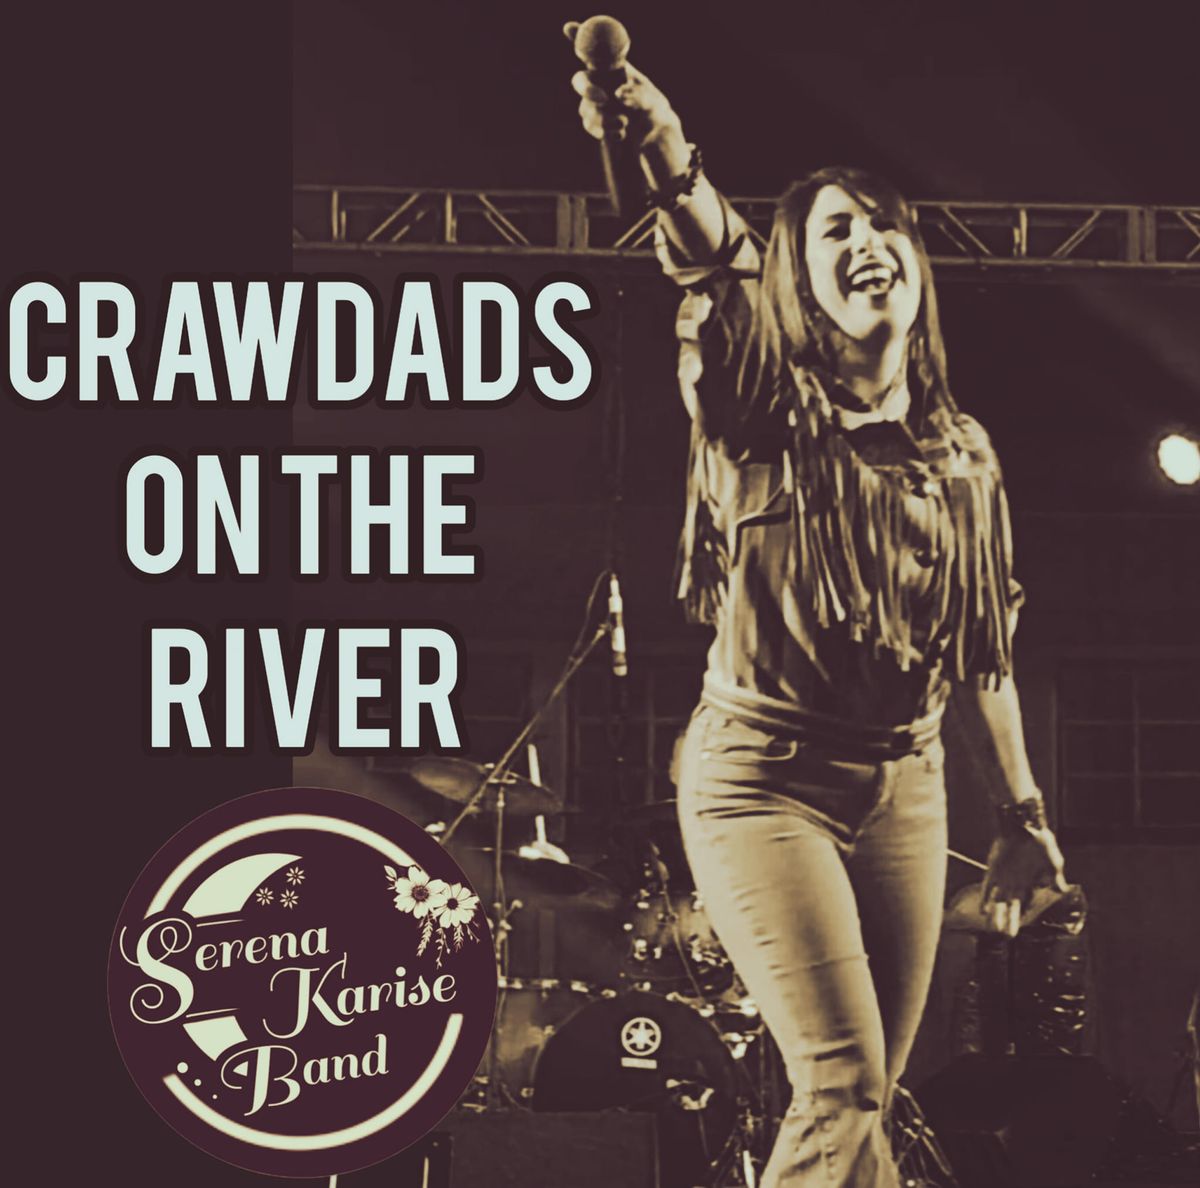 Serena Karise Band live @ Crawdads on the River!